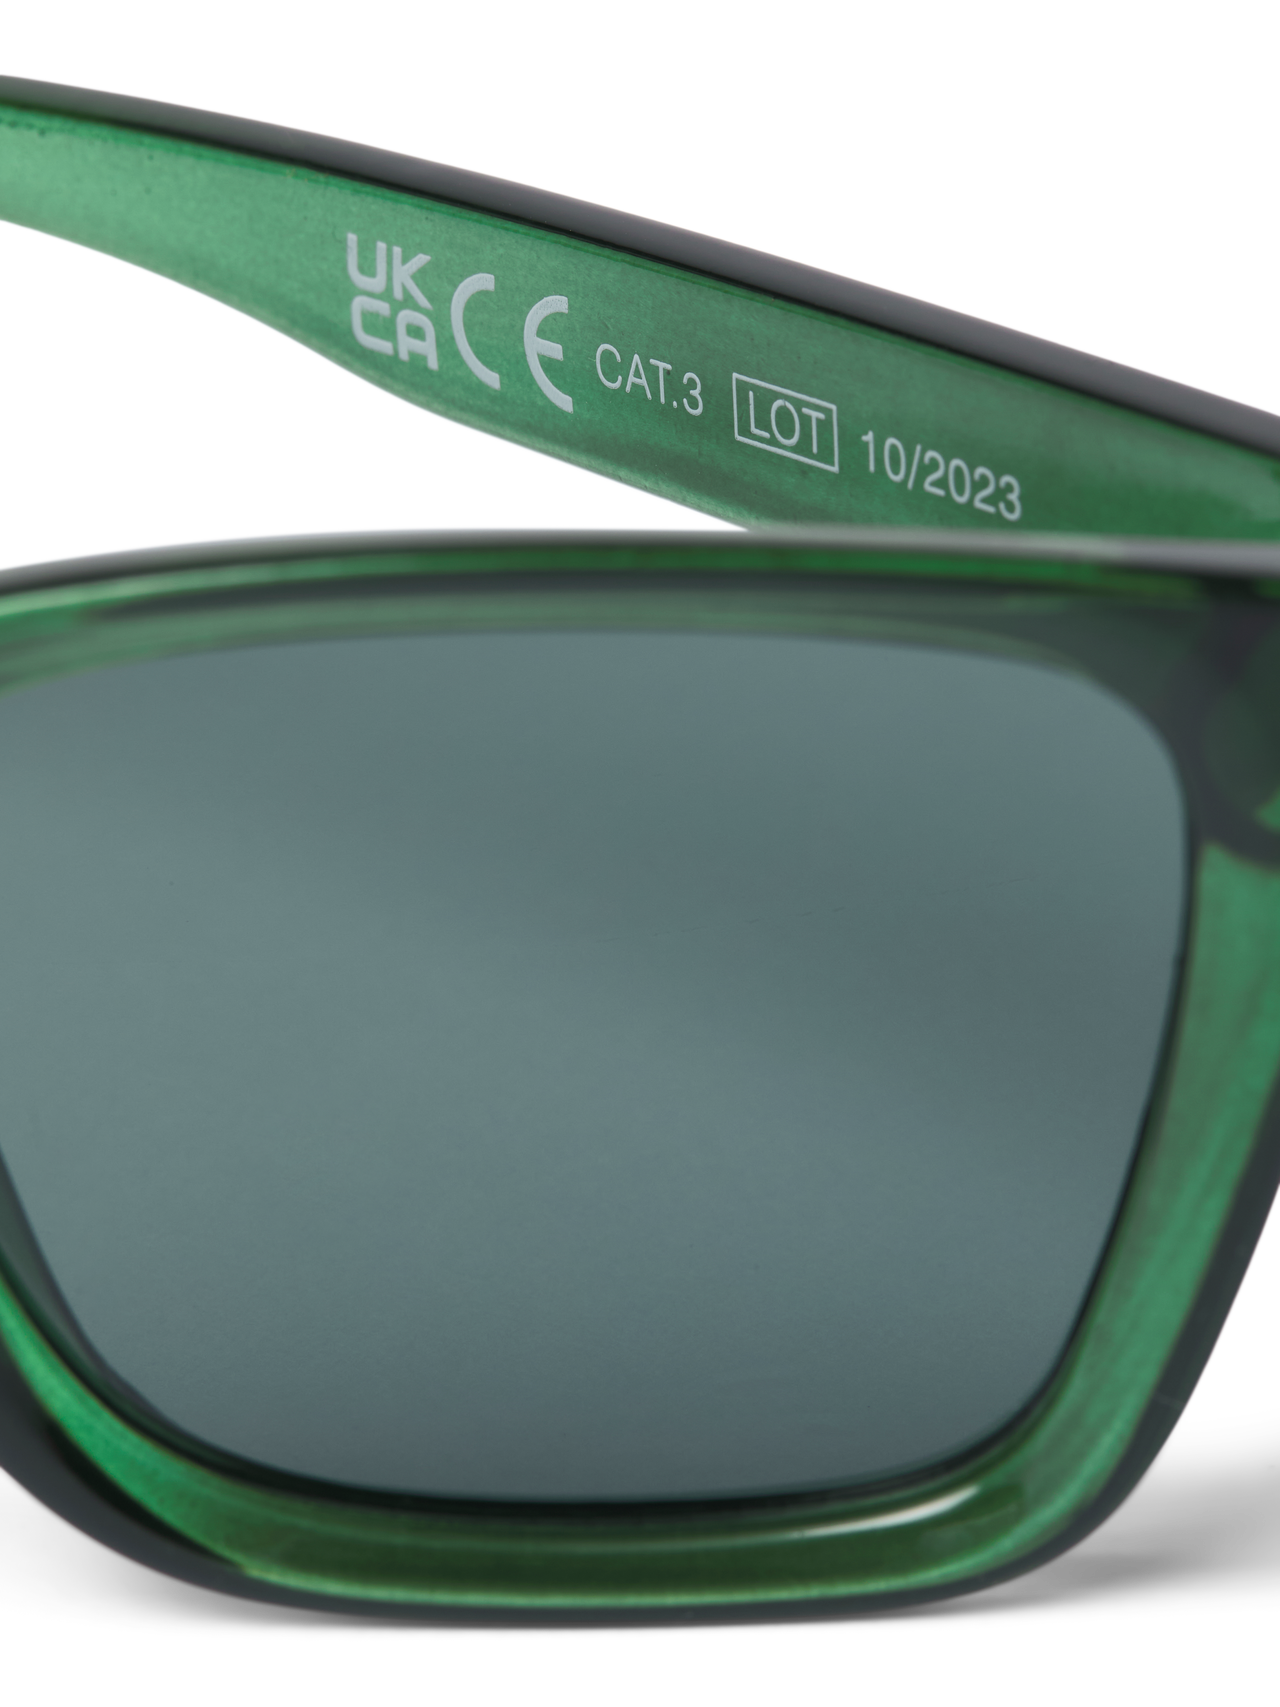 Jack & Jones Plastik Rechtackige Sonnenbrille -Green Spruce - 12251480